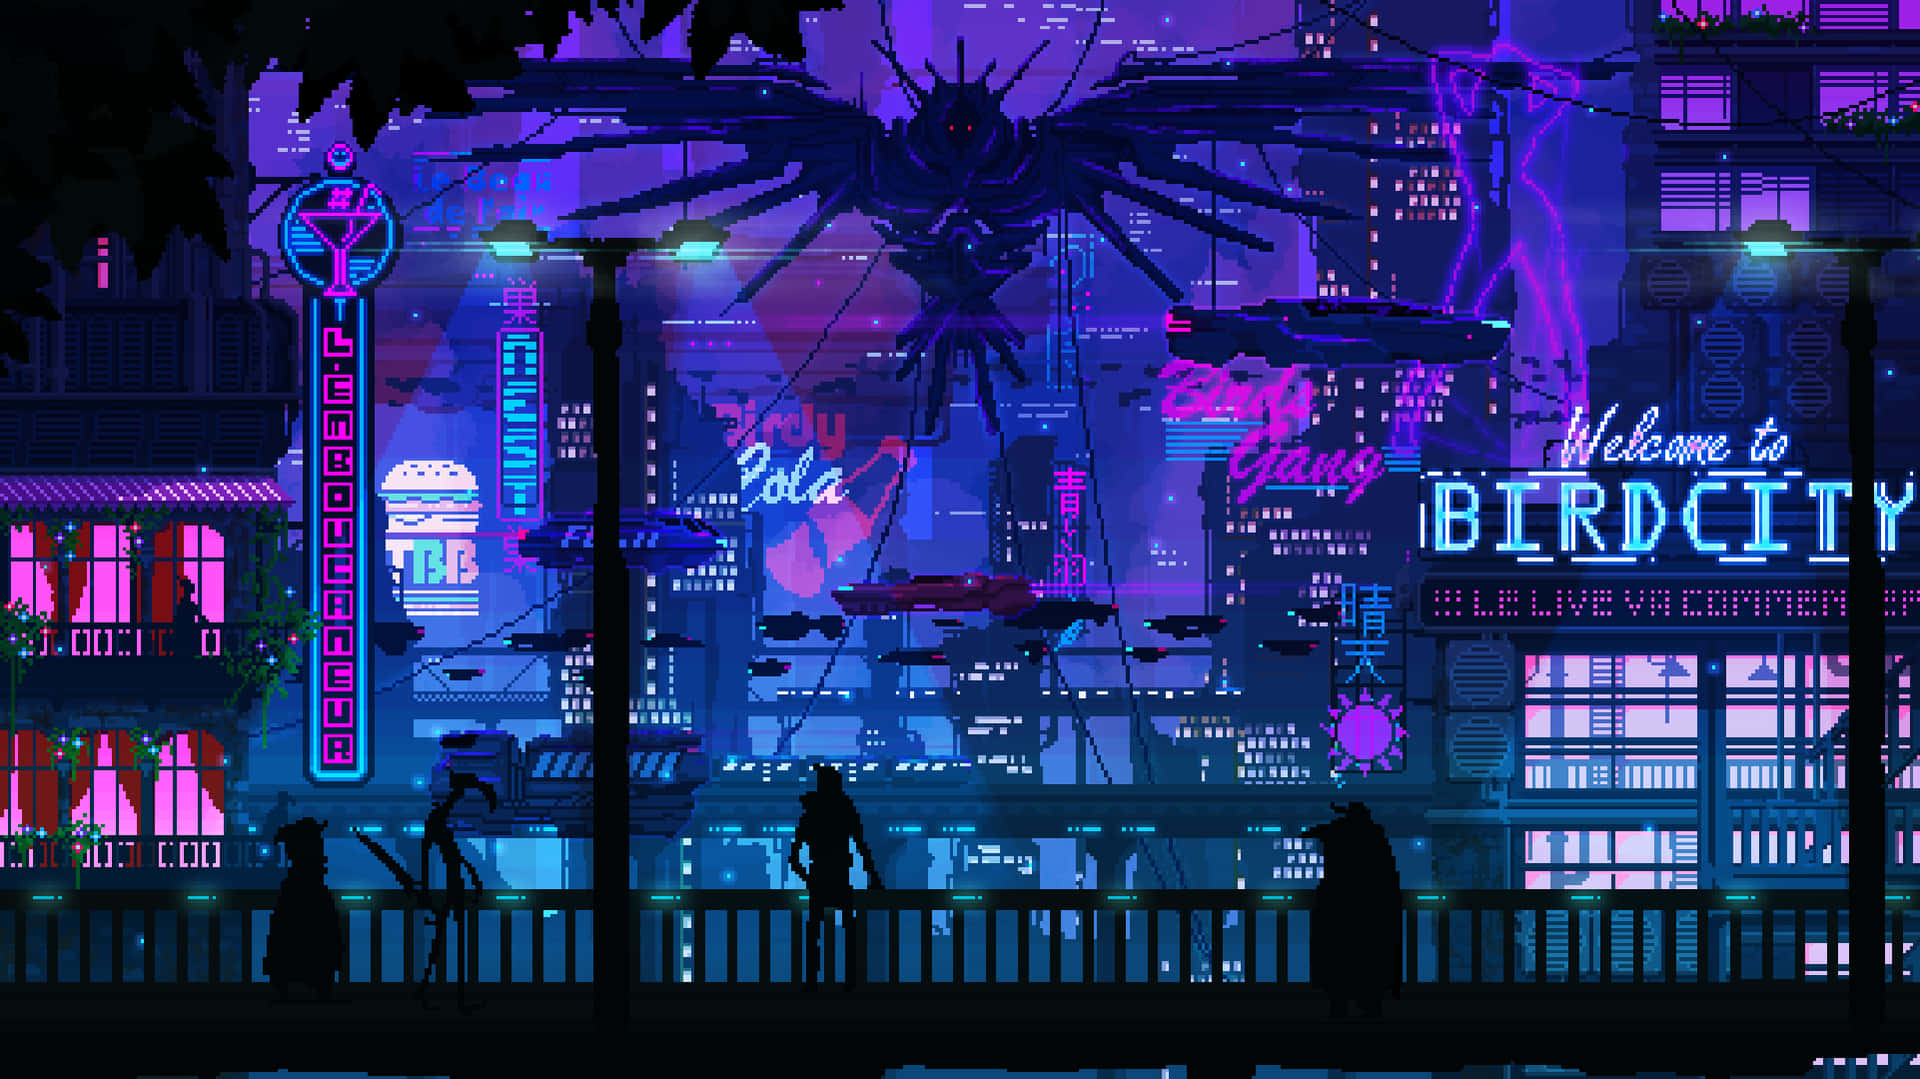 "Deep in the cyberpunk pixel world". Wallpaper